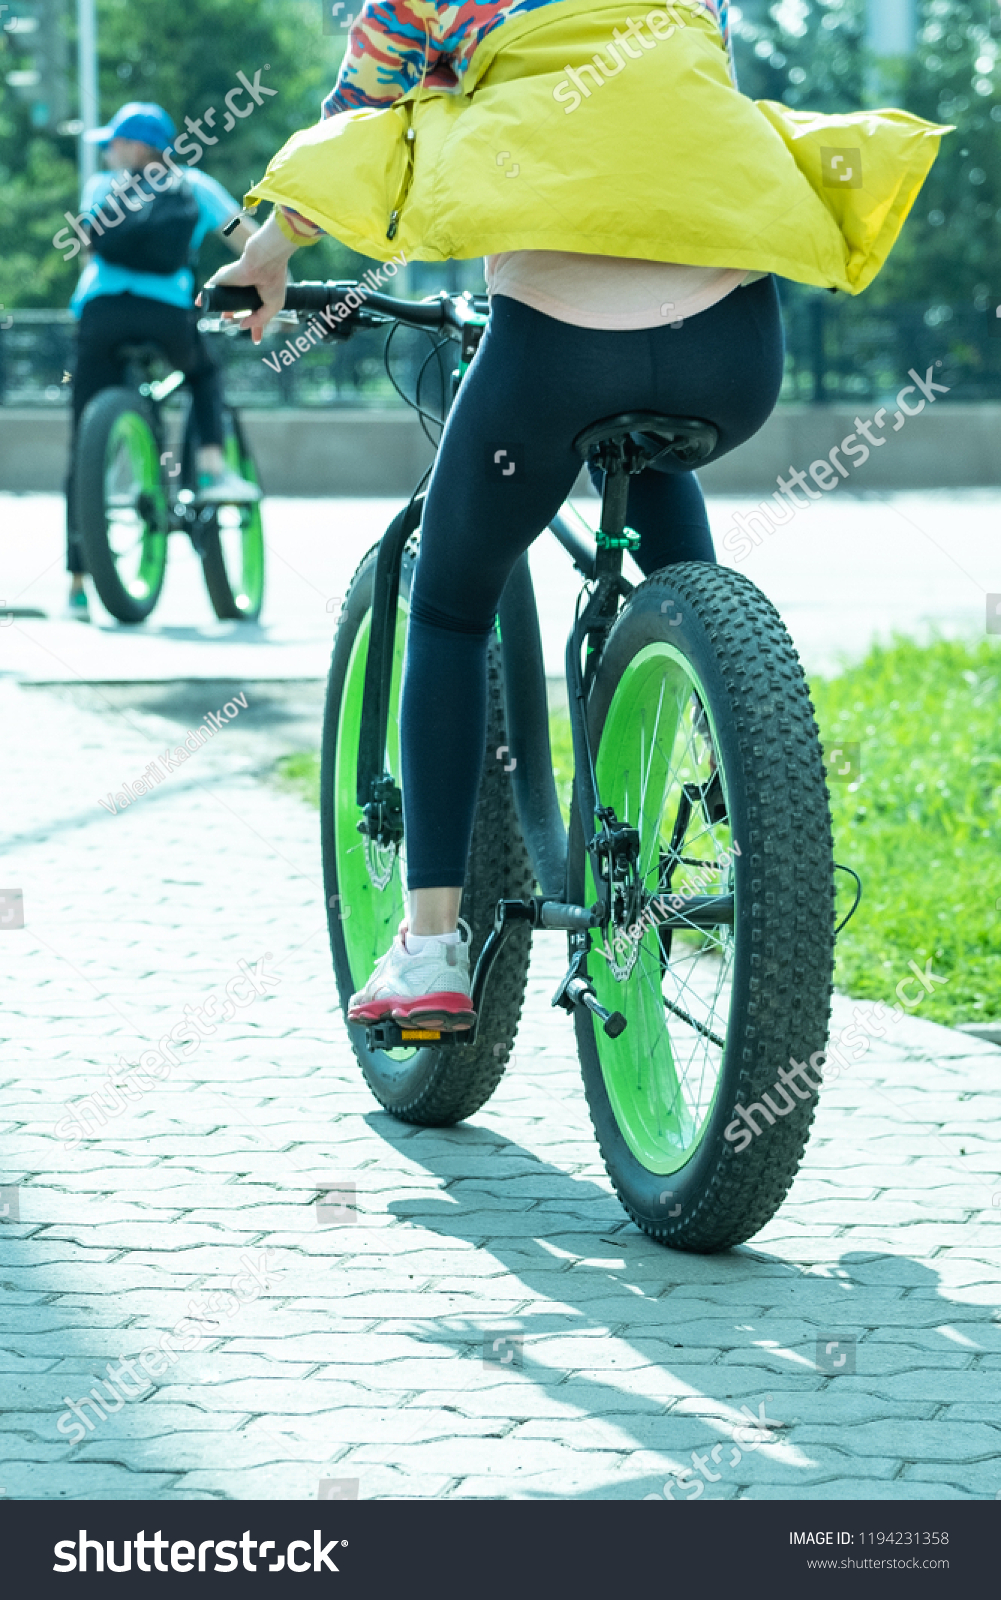 big wheel bike for girls